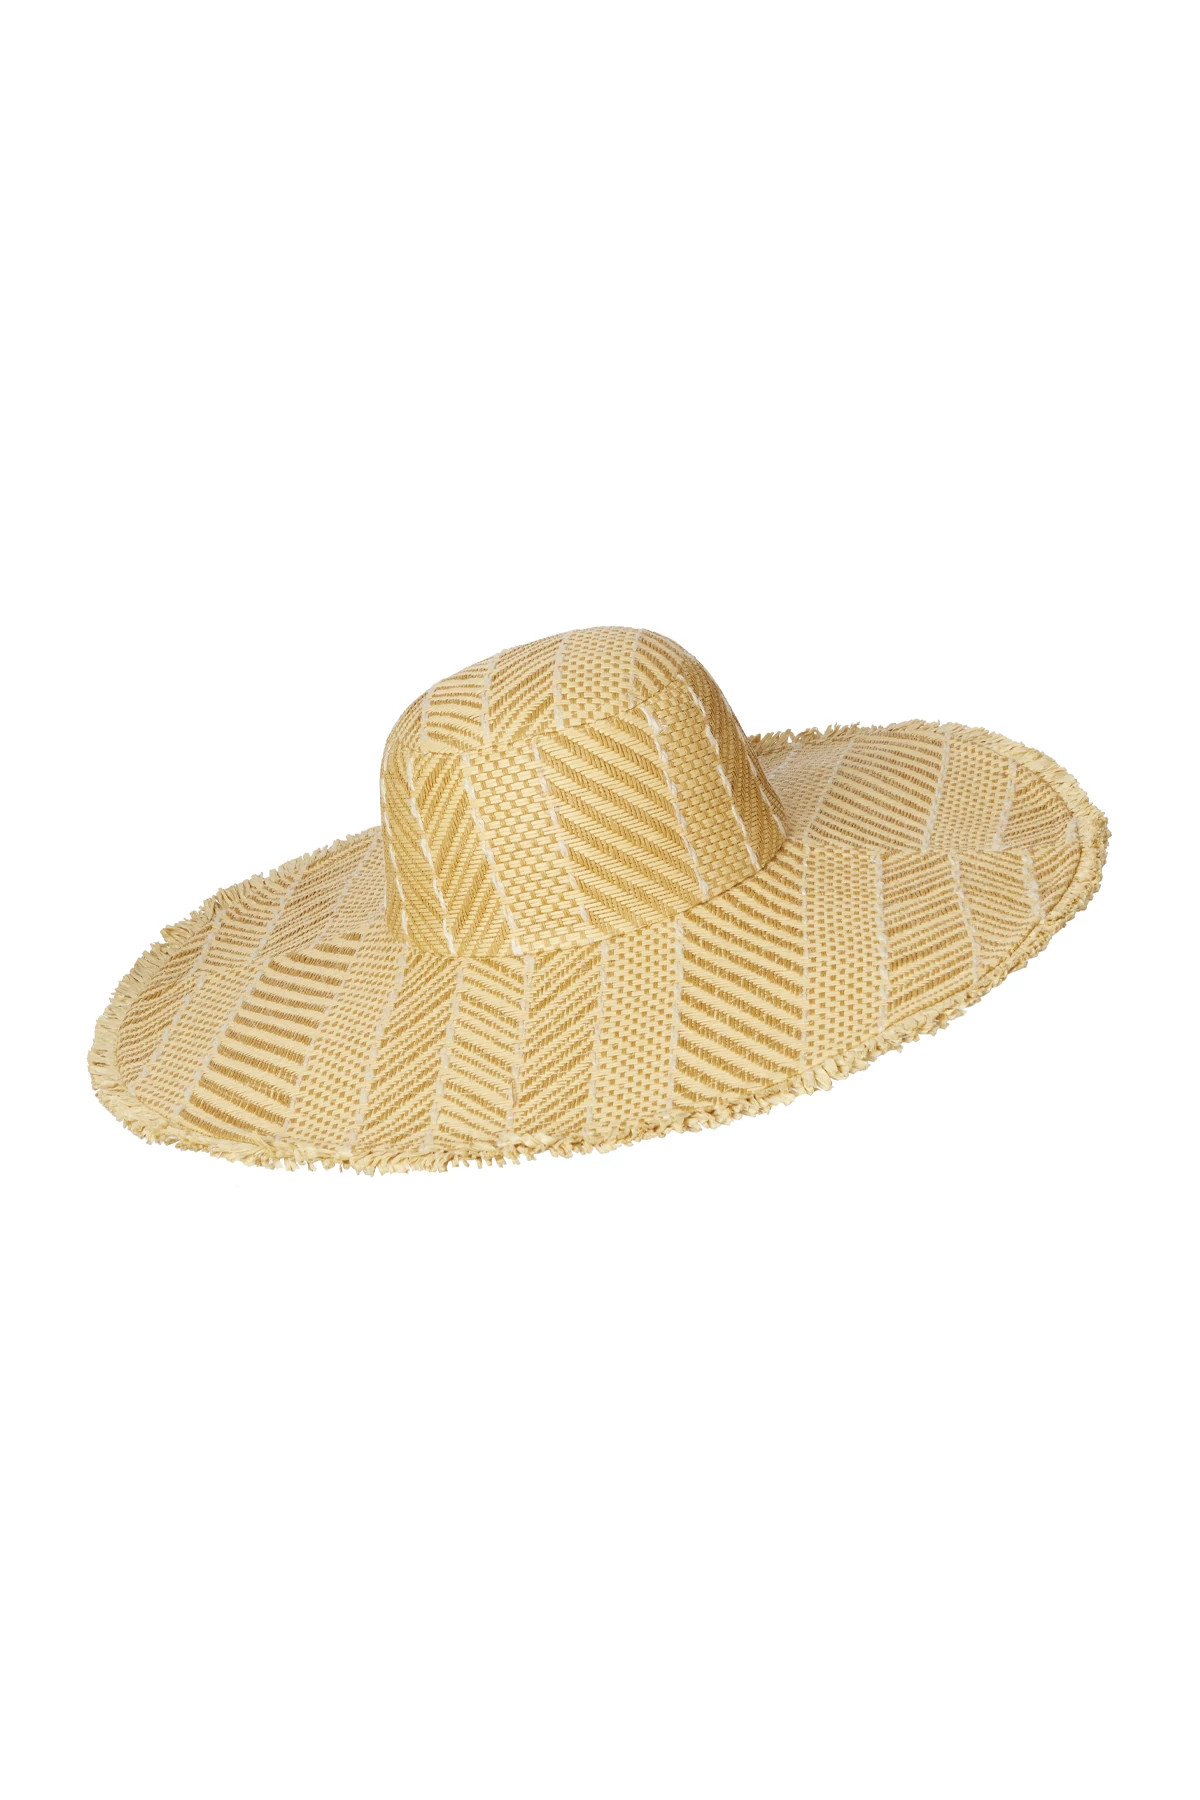 NATURAL Textured Sun Hat image number 1